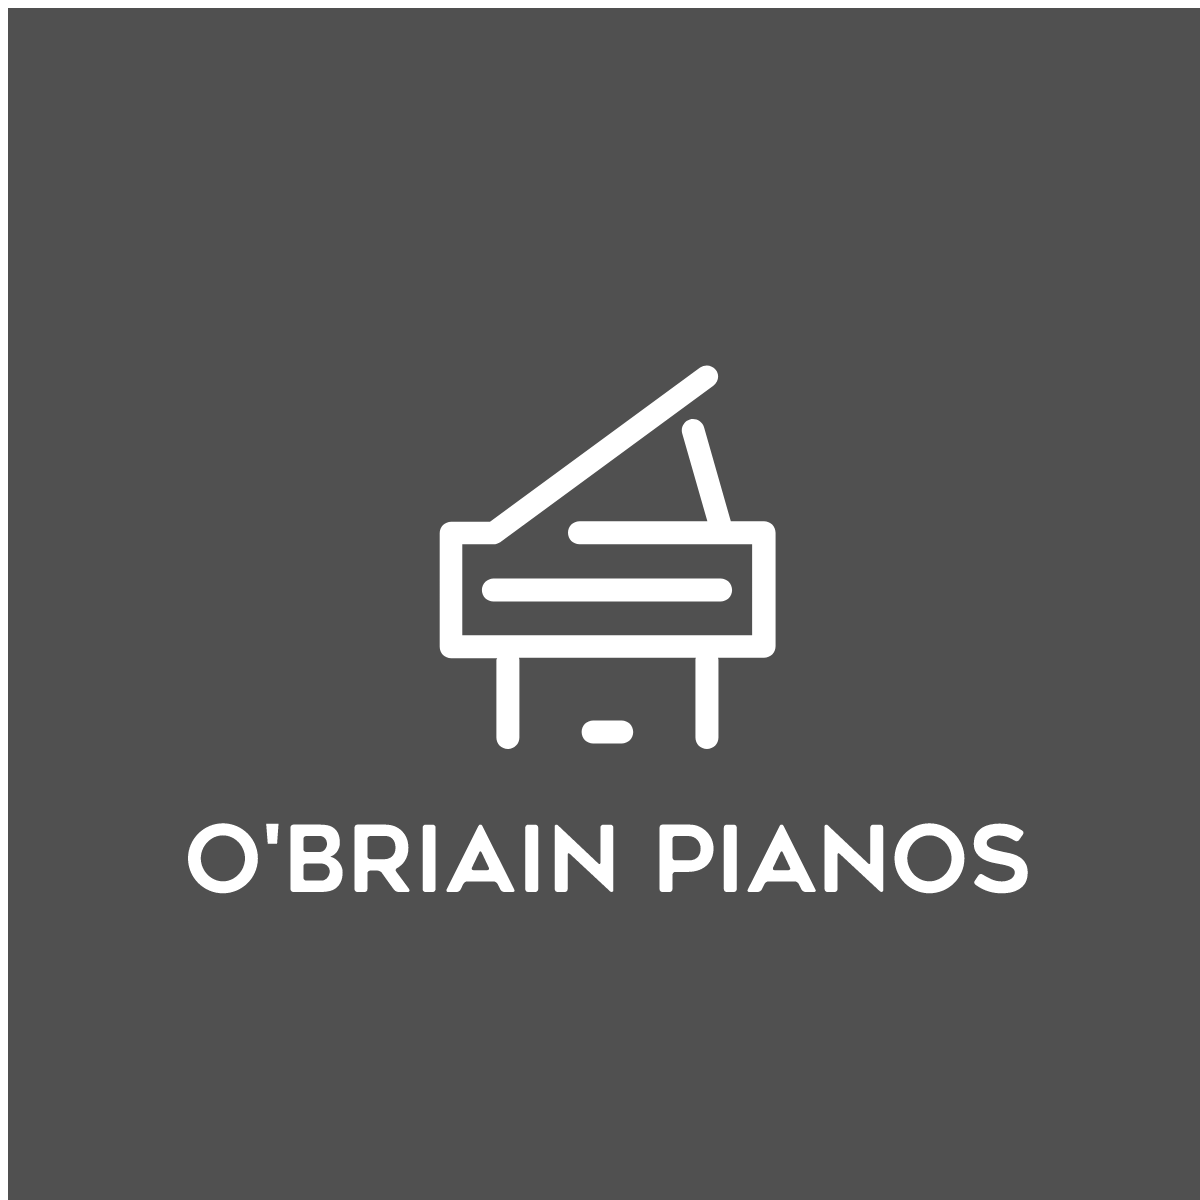 O'Briain Pianos |  Pianos for Sale | Lucan, Dublin, Ireland-O'Briain Pianos